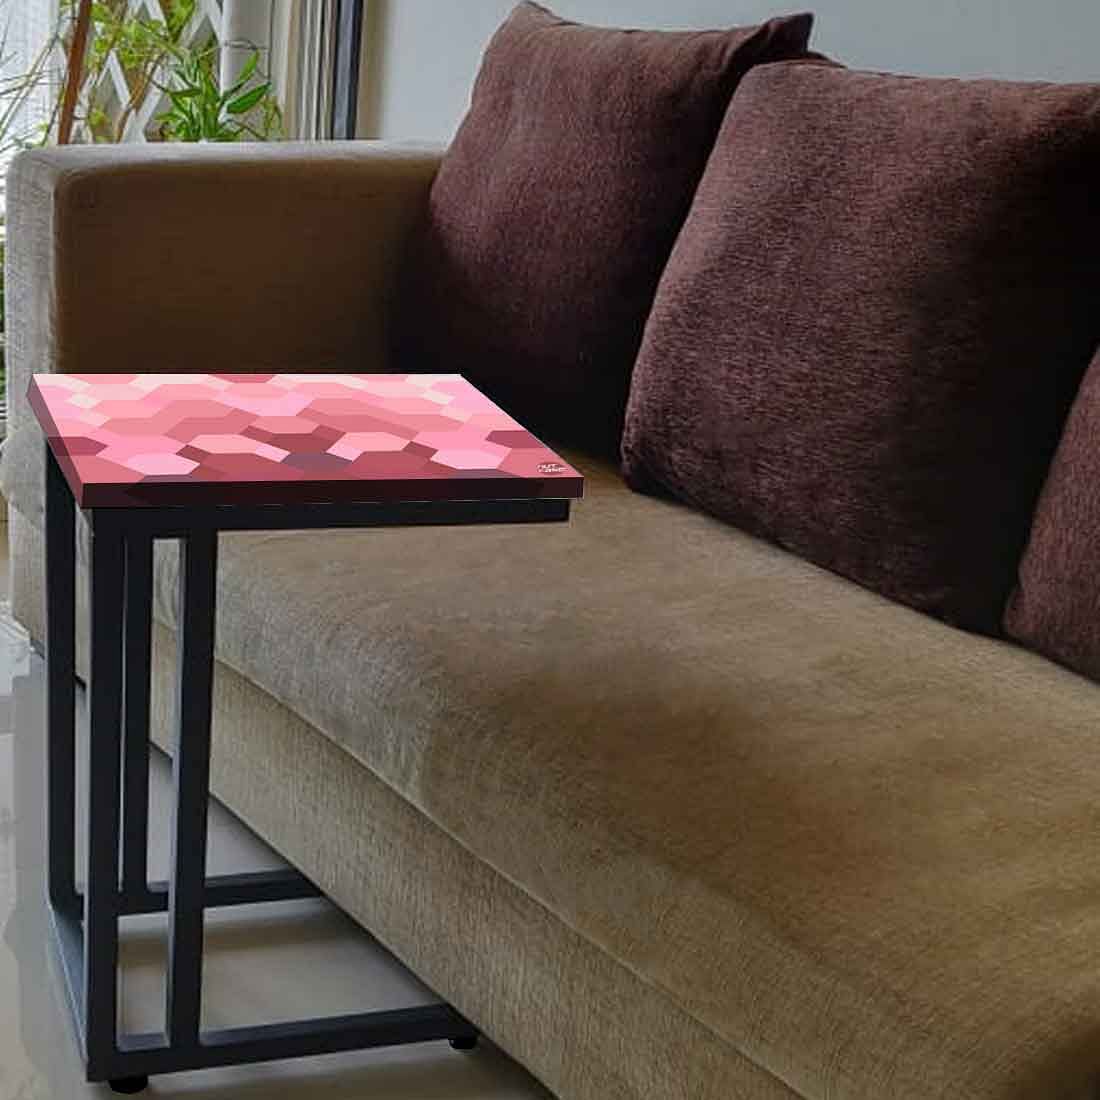 New Modern C Side Table - Hexagon Pink Pattern Nutcase